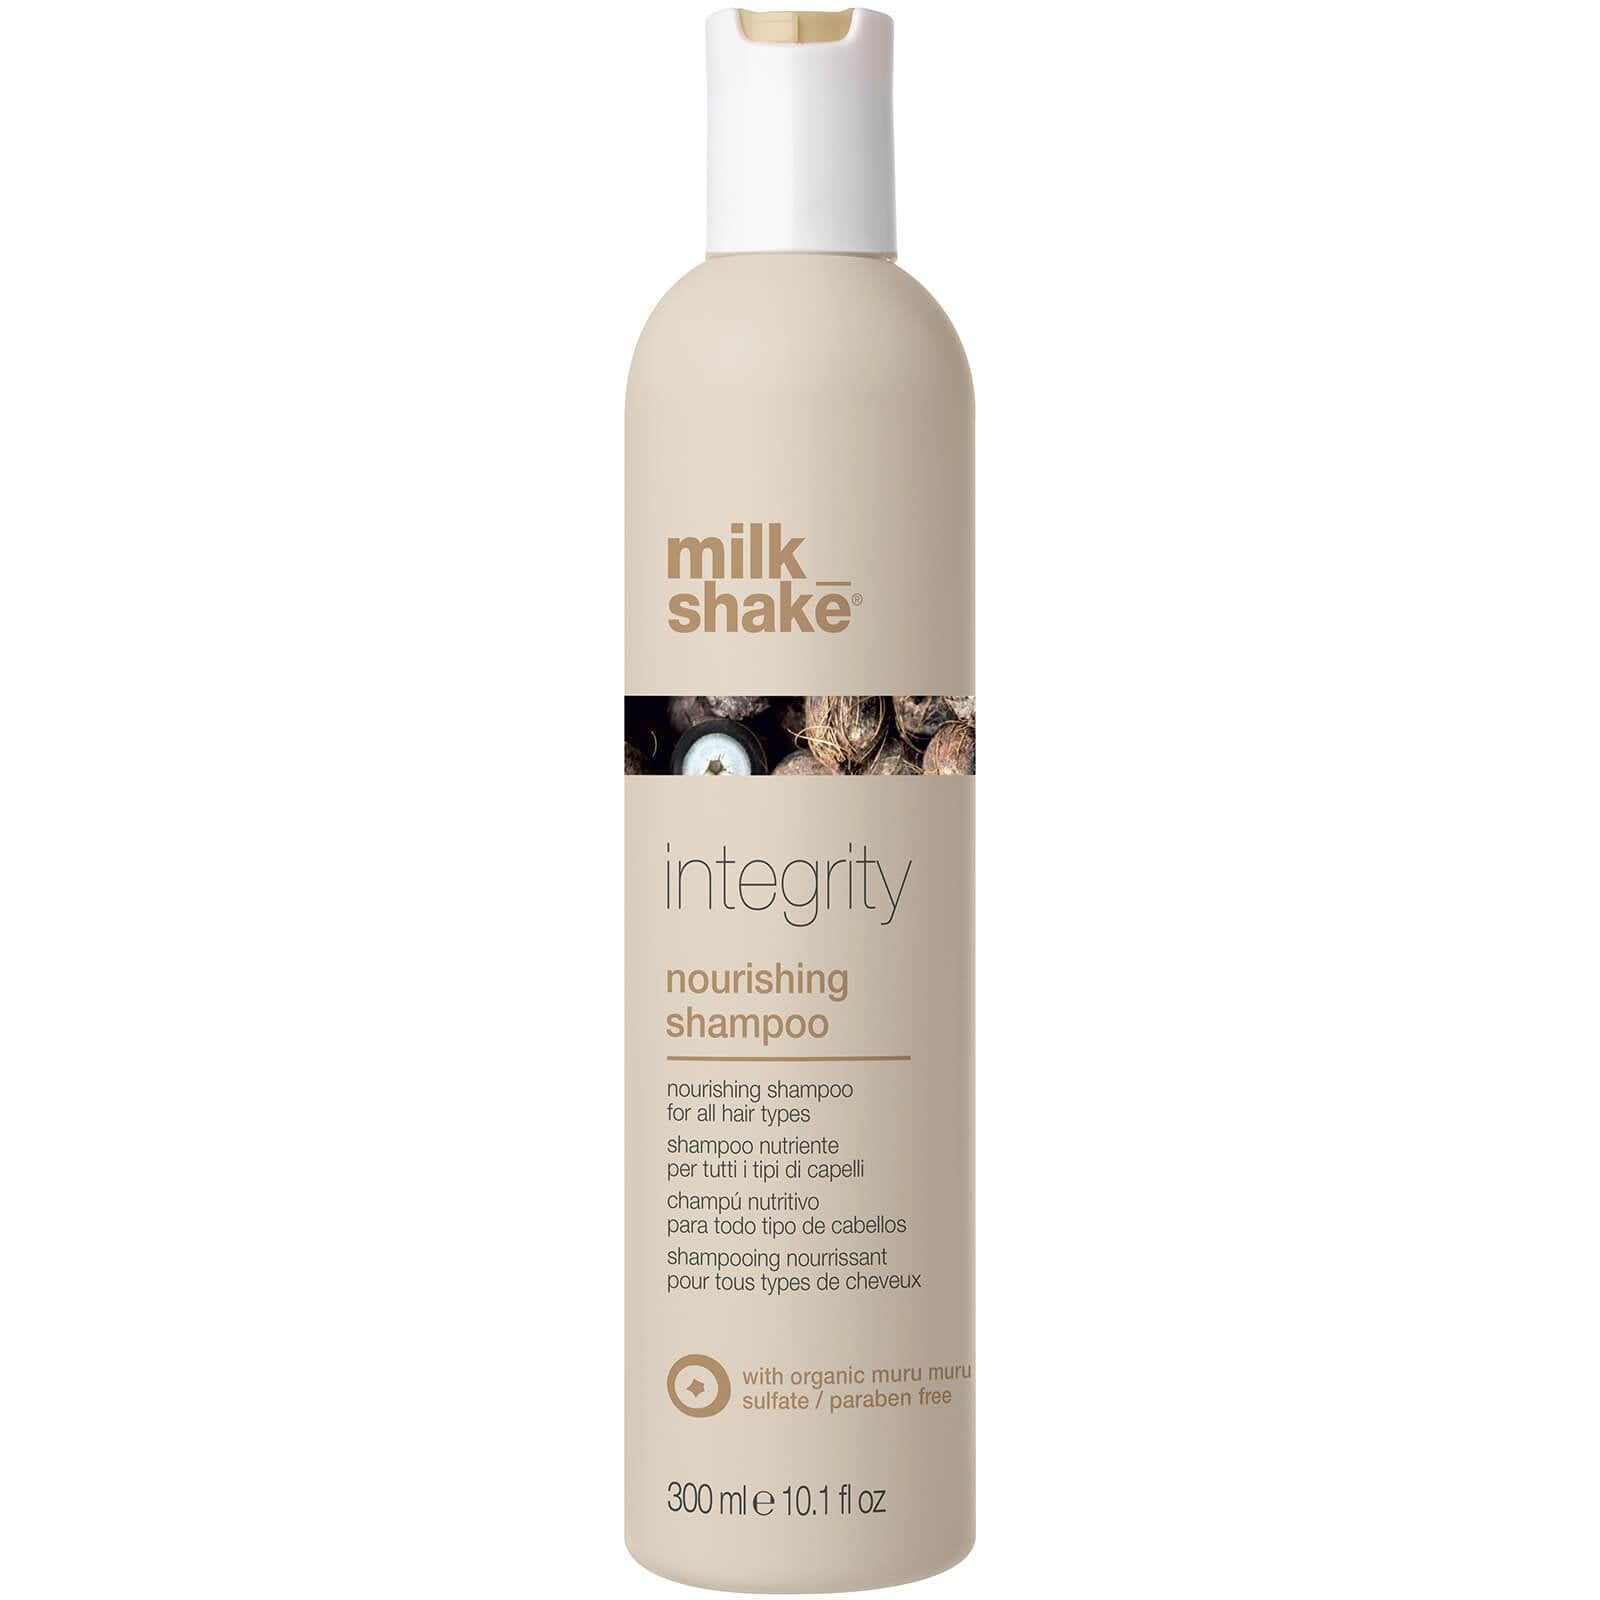 Milkshake Integrity Nourishing Shampoo 10.1 oz | Milk Shake